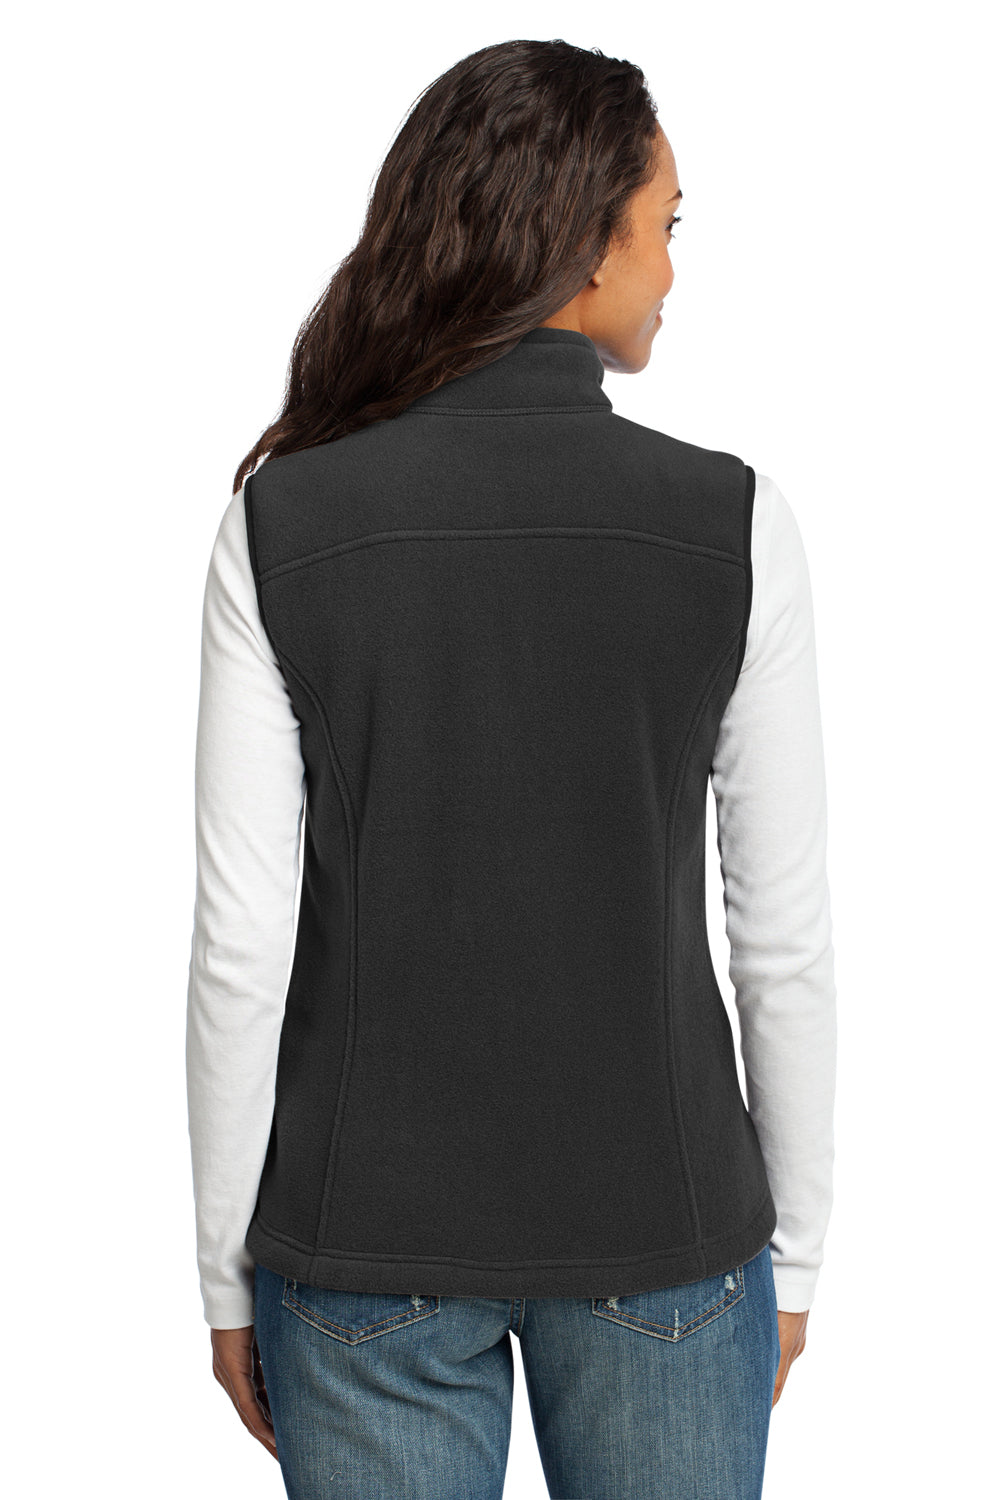 Eddie Bauer EB205 Womens Full Zip Fleece Vest Black Model Back